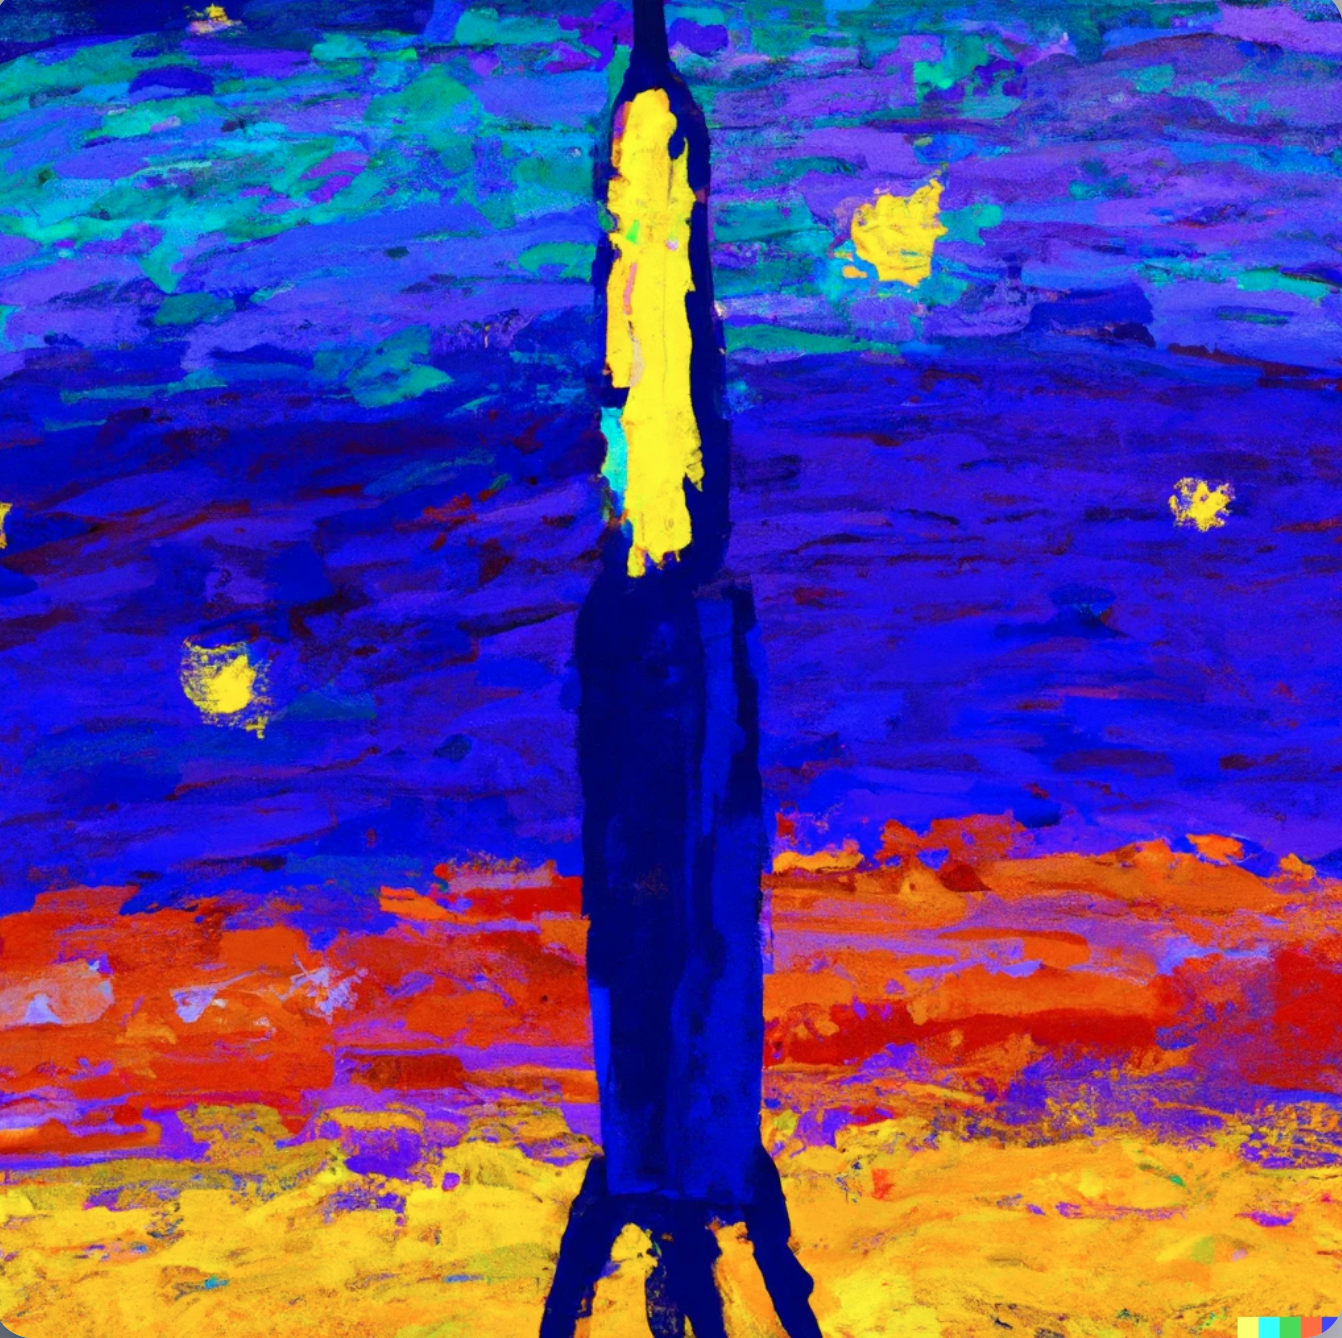 Van Gogh’s painting of a rocket